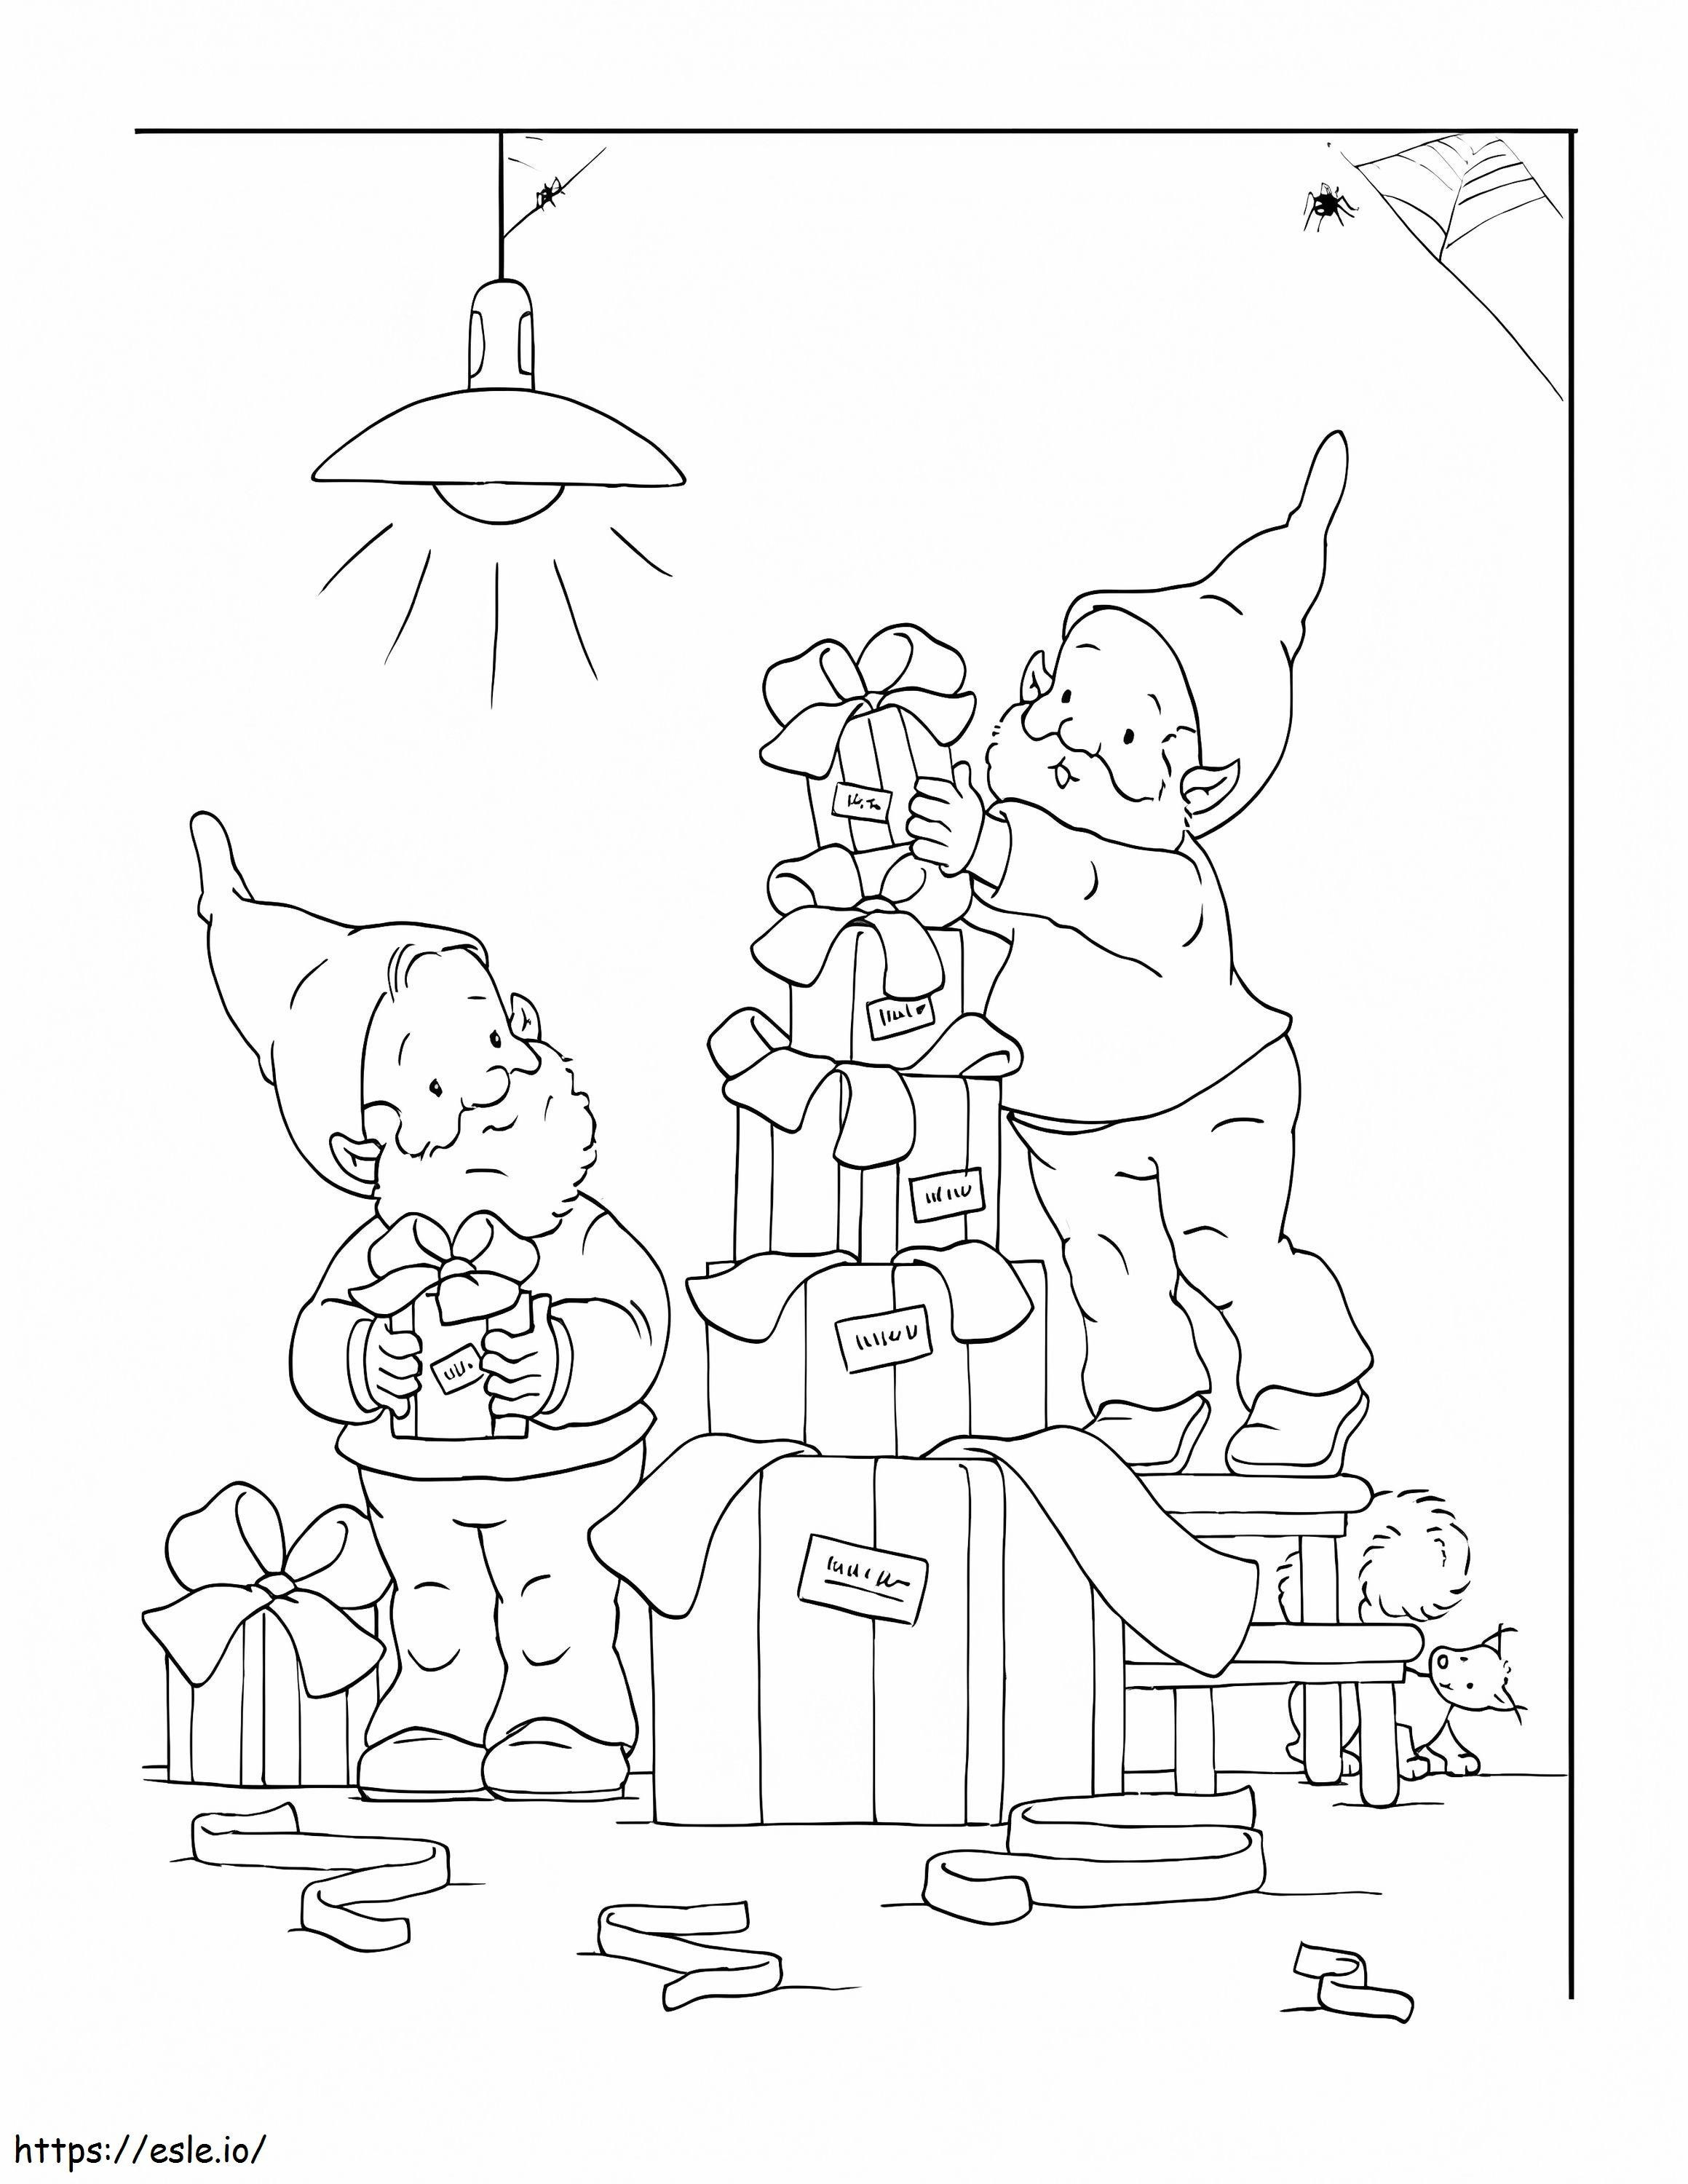 Dwarfs Help Santa coloring page